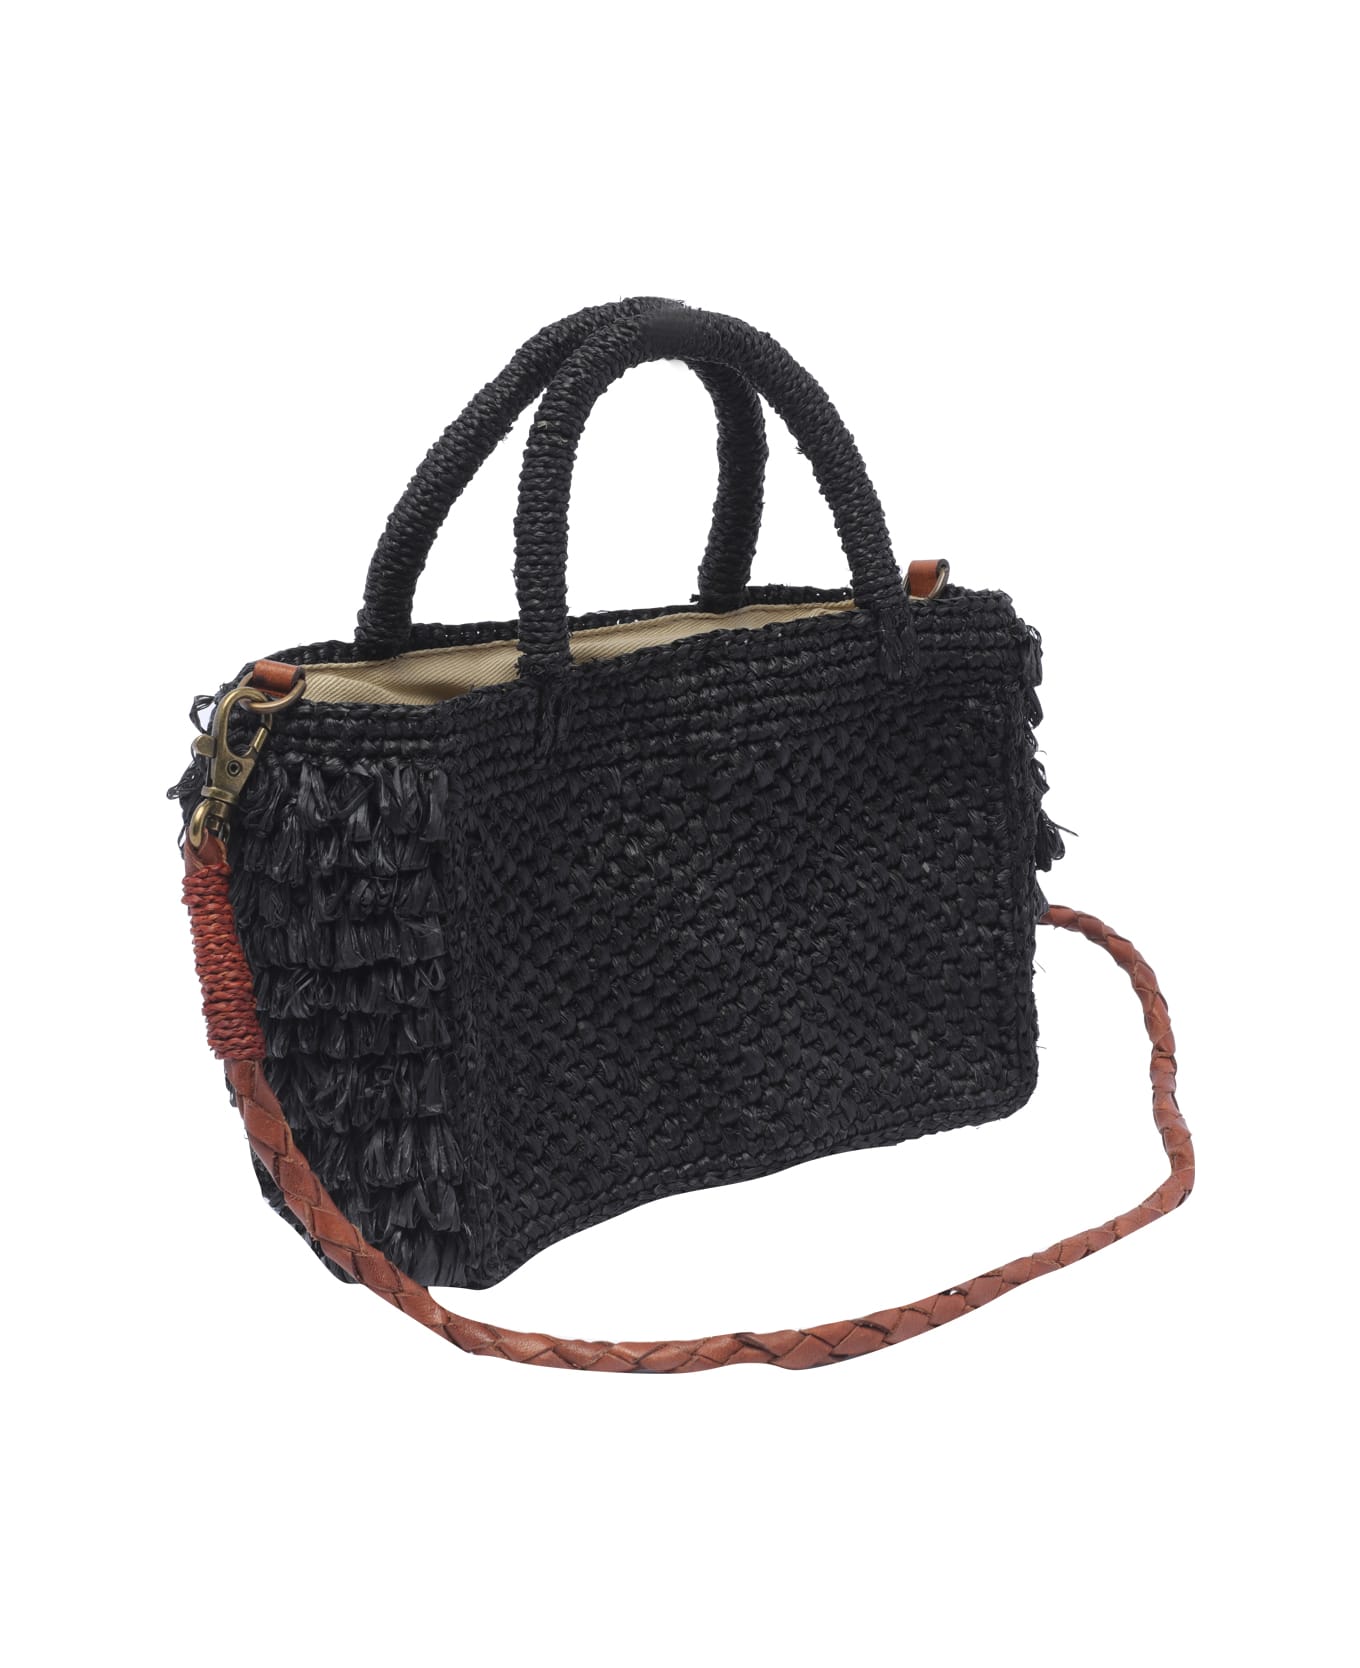 Ibeliv Cocktail Handbag - Black